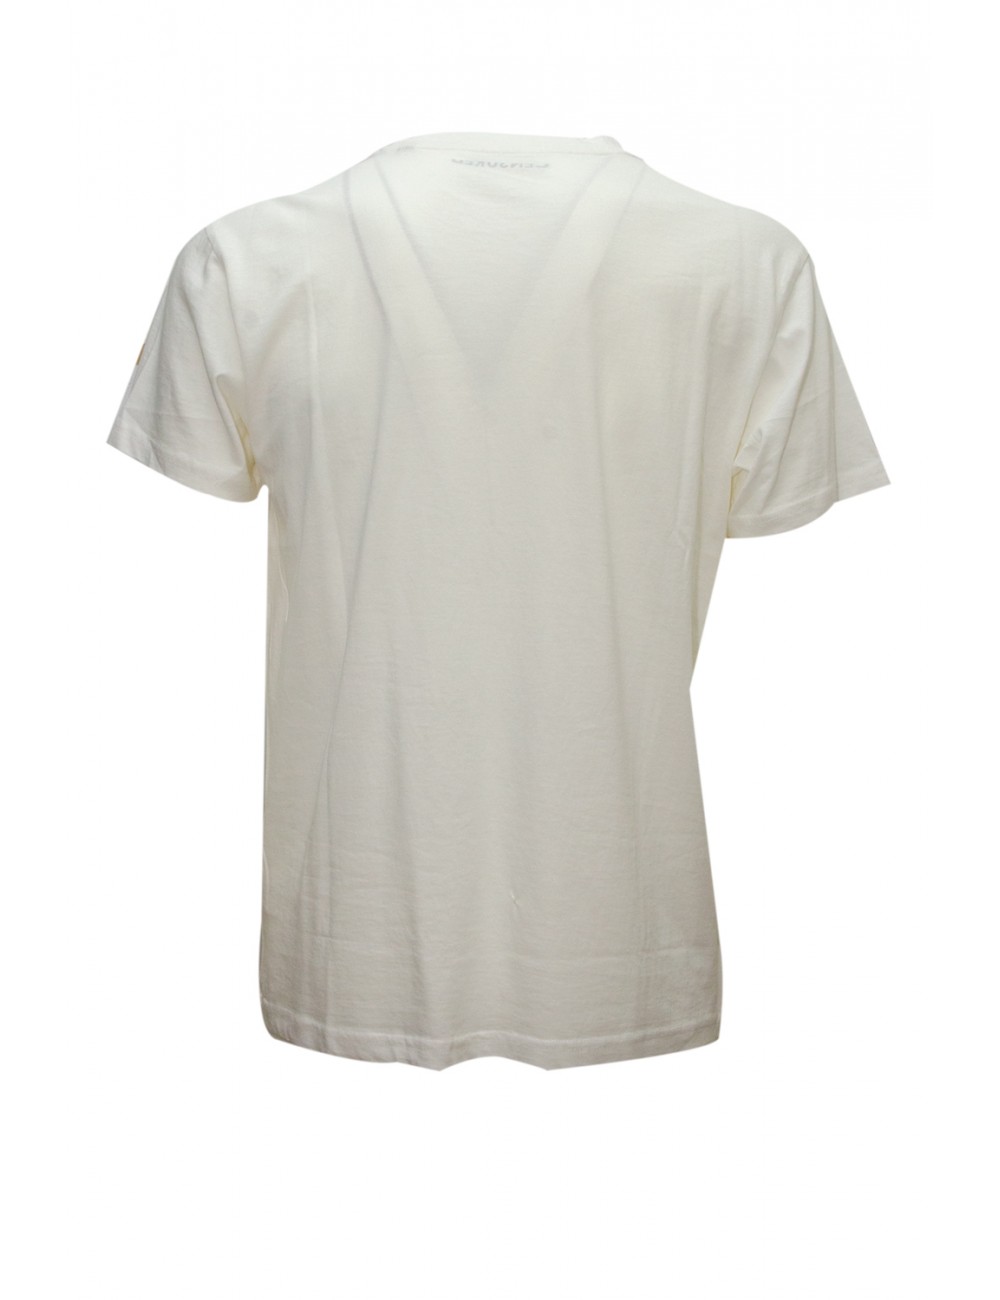 t-shirt censured UOMO BIANCA OFF WHITE - TM C227 T JSEL 01 vista frontale